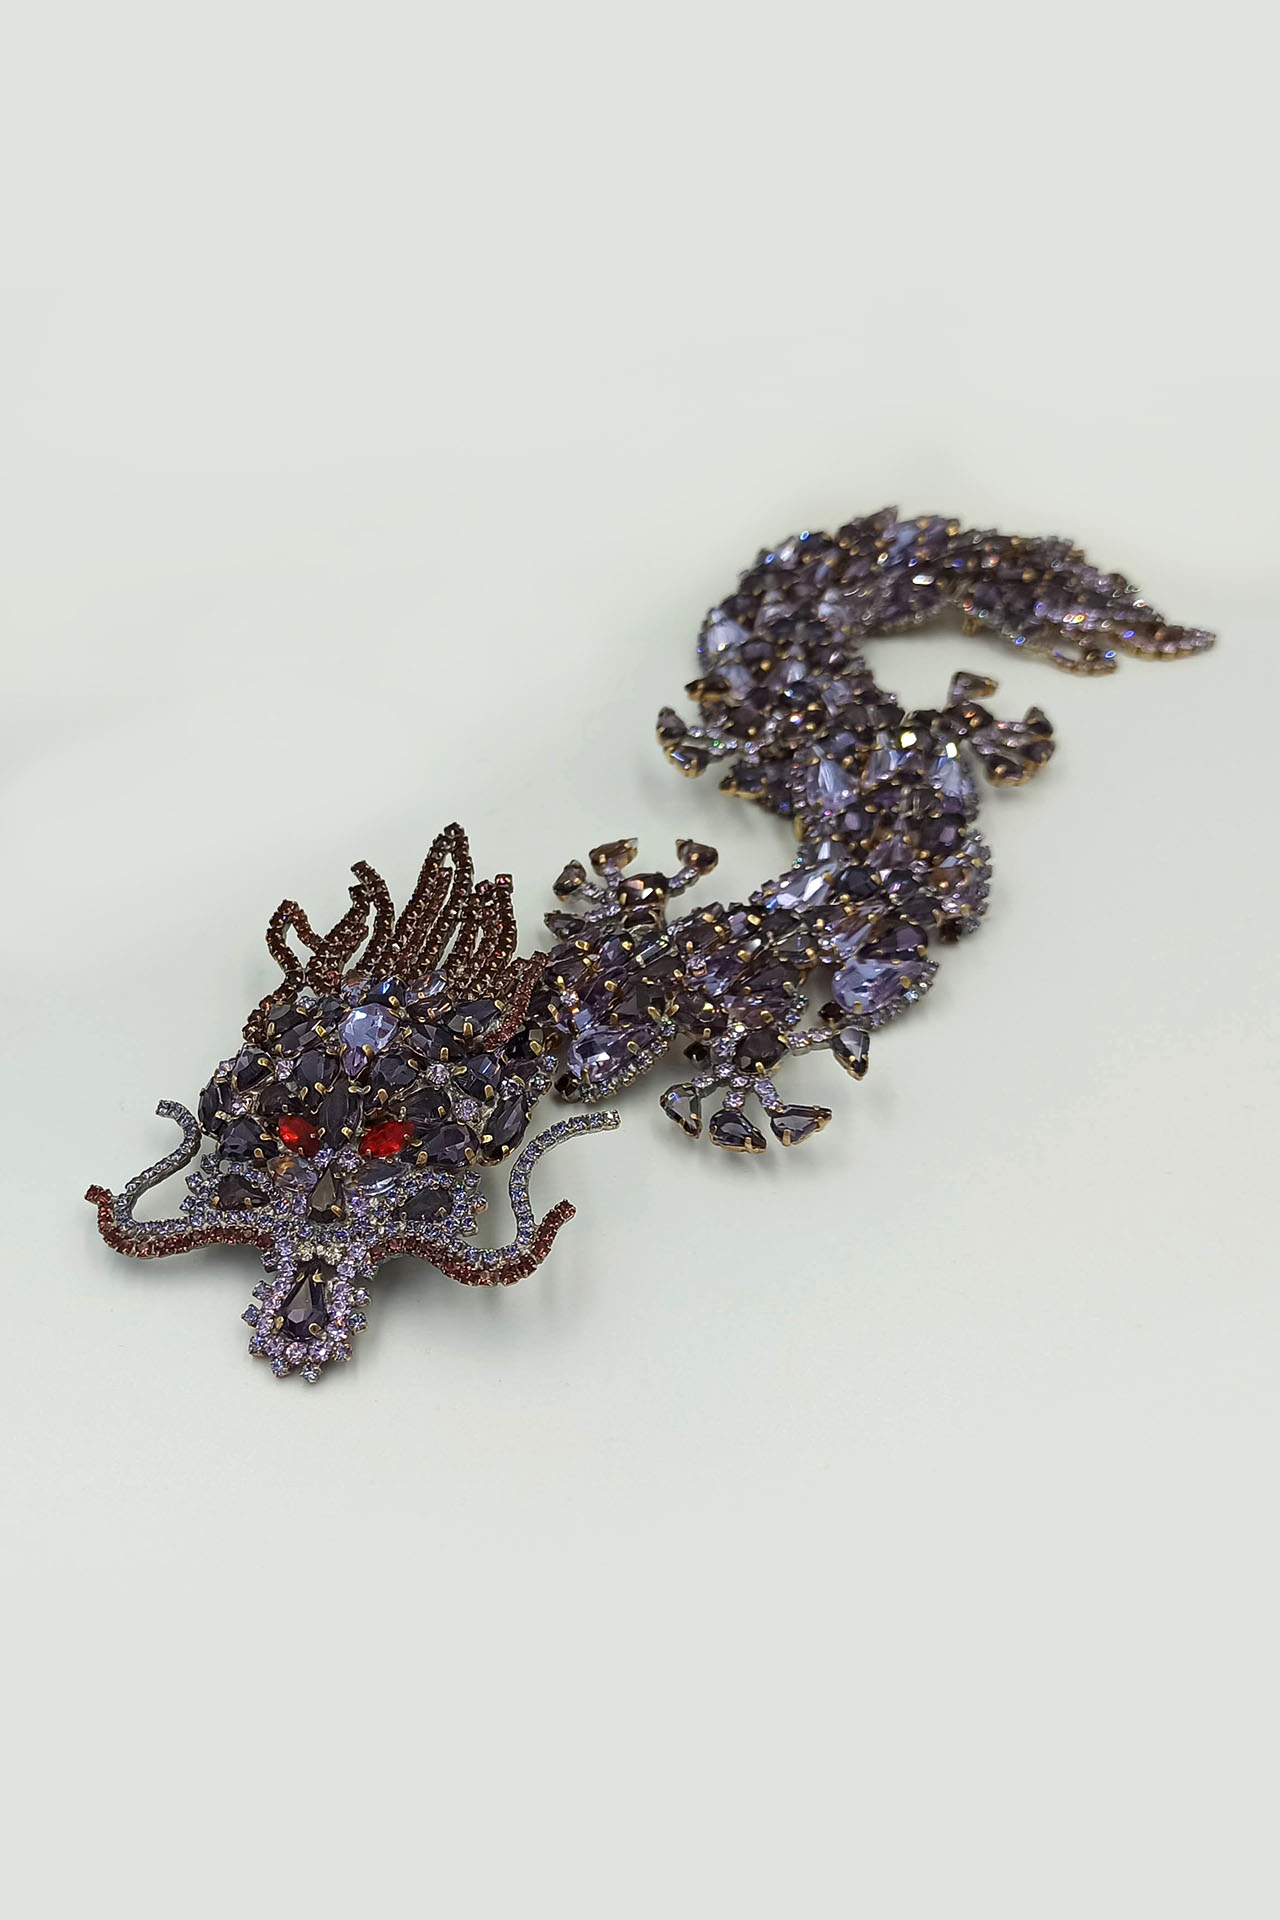 Handmade rhinestone brooch with a purple Chinese dragon